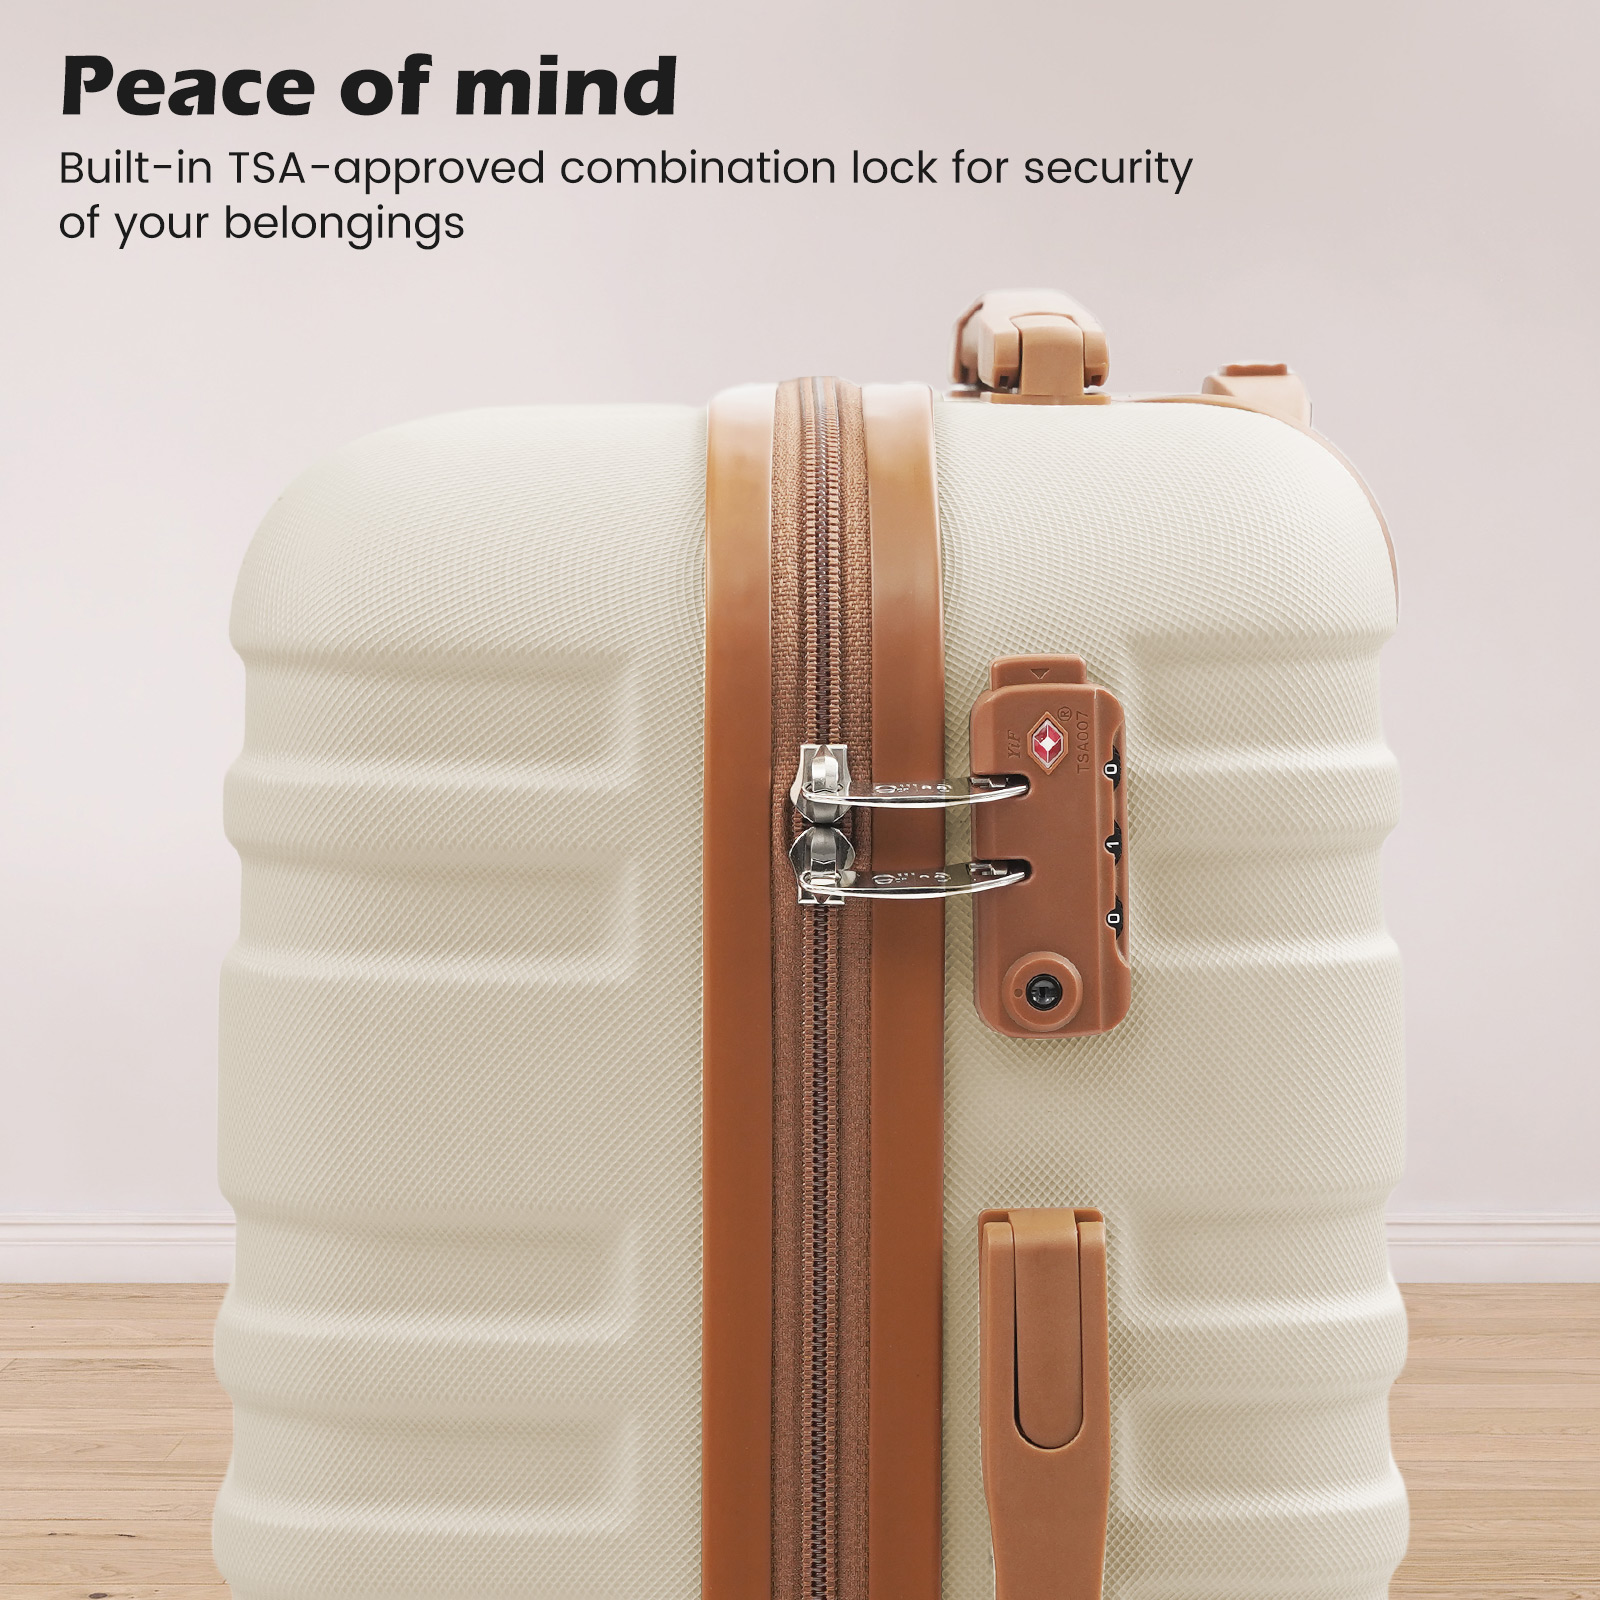 Coolife Luggage Suitcase Carry On Hardside Luggage with TSA Lock Spinner Wheels